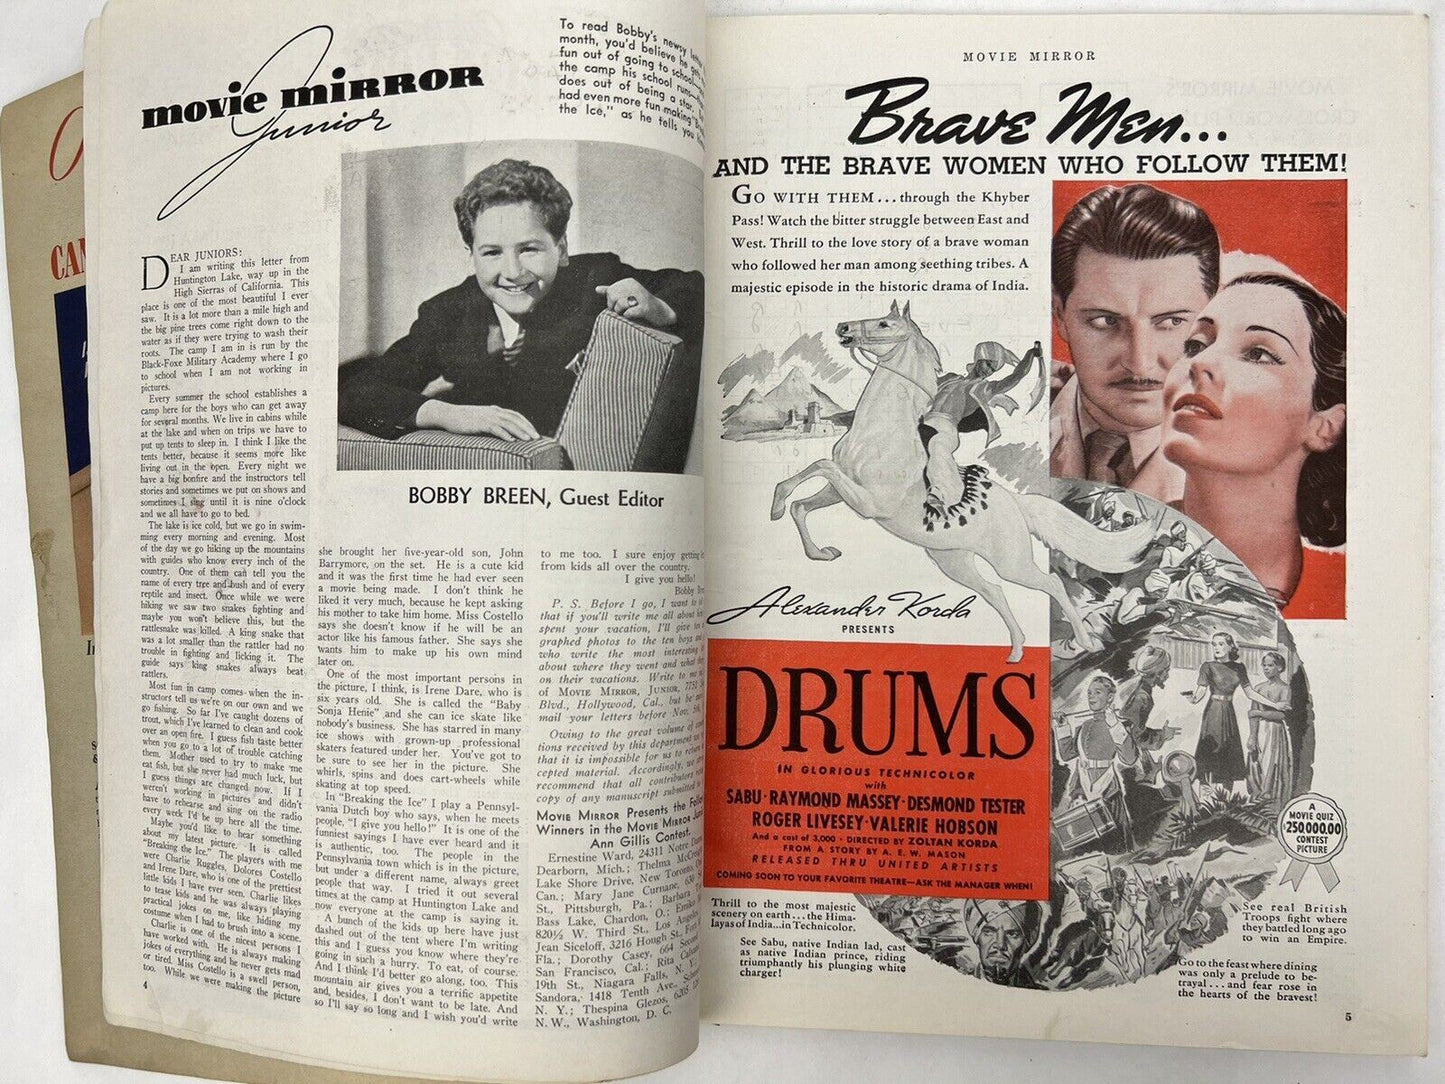 MOVIE MIRROR Magazine NOVEMBER 1938 Jeanette Macdonald Cover